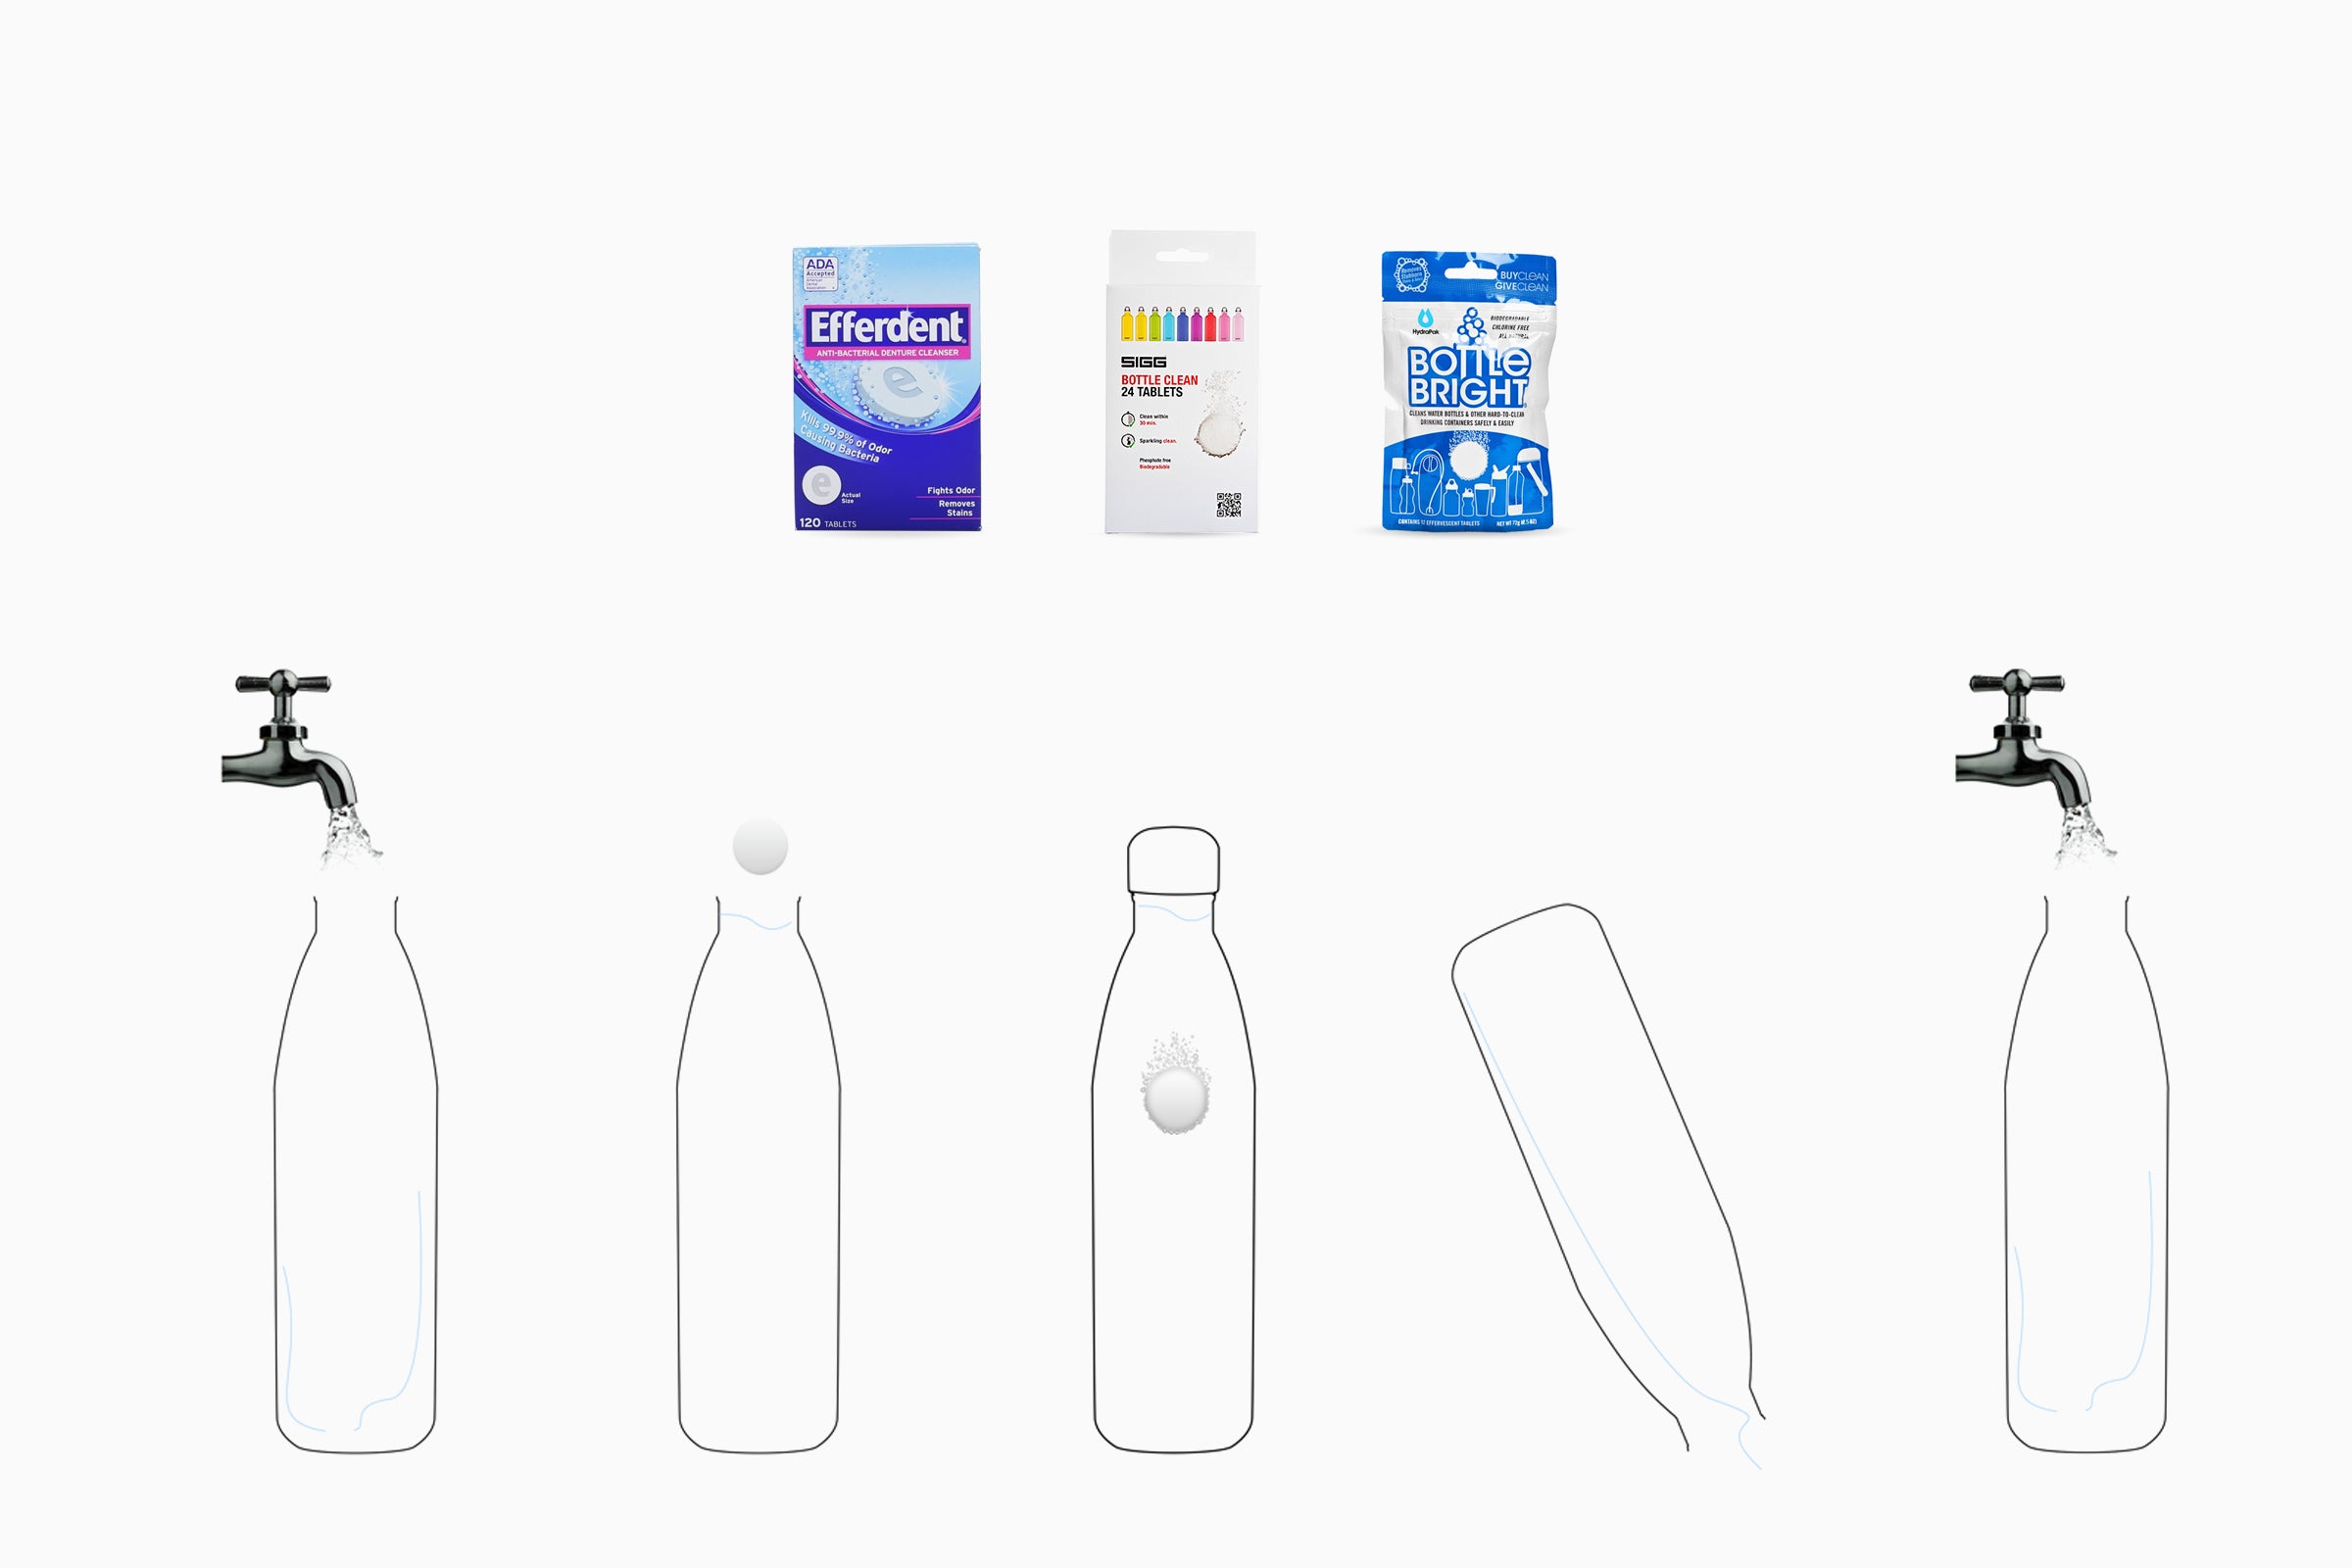 Do Bottle Cleaning Tablets like Bottle Bright Really Work?